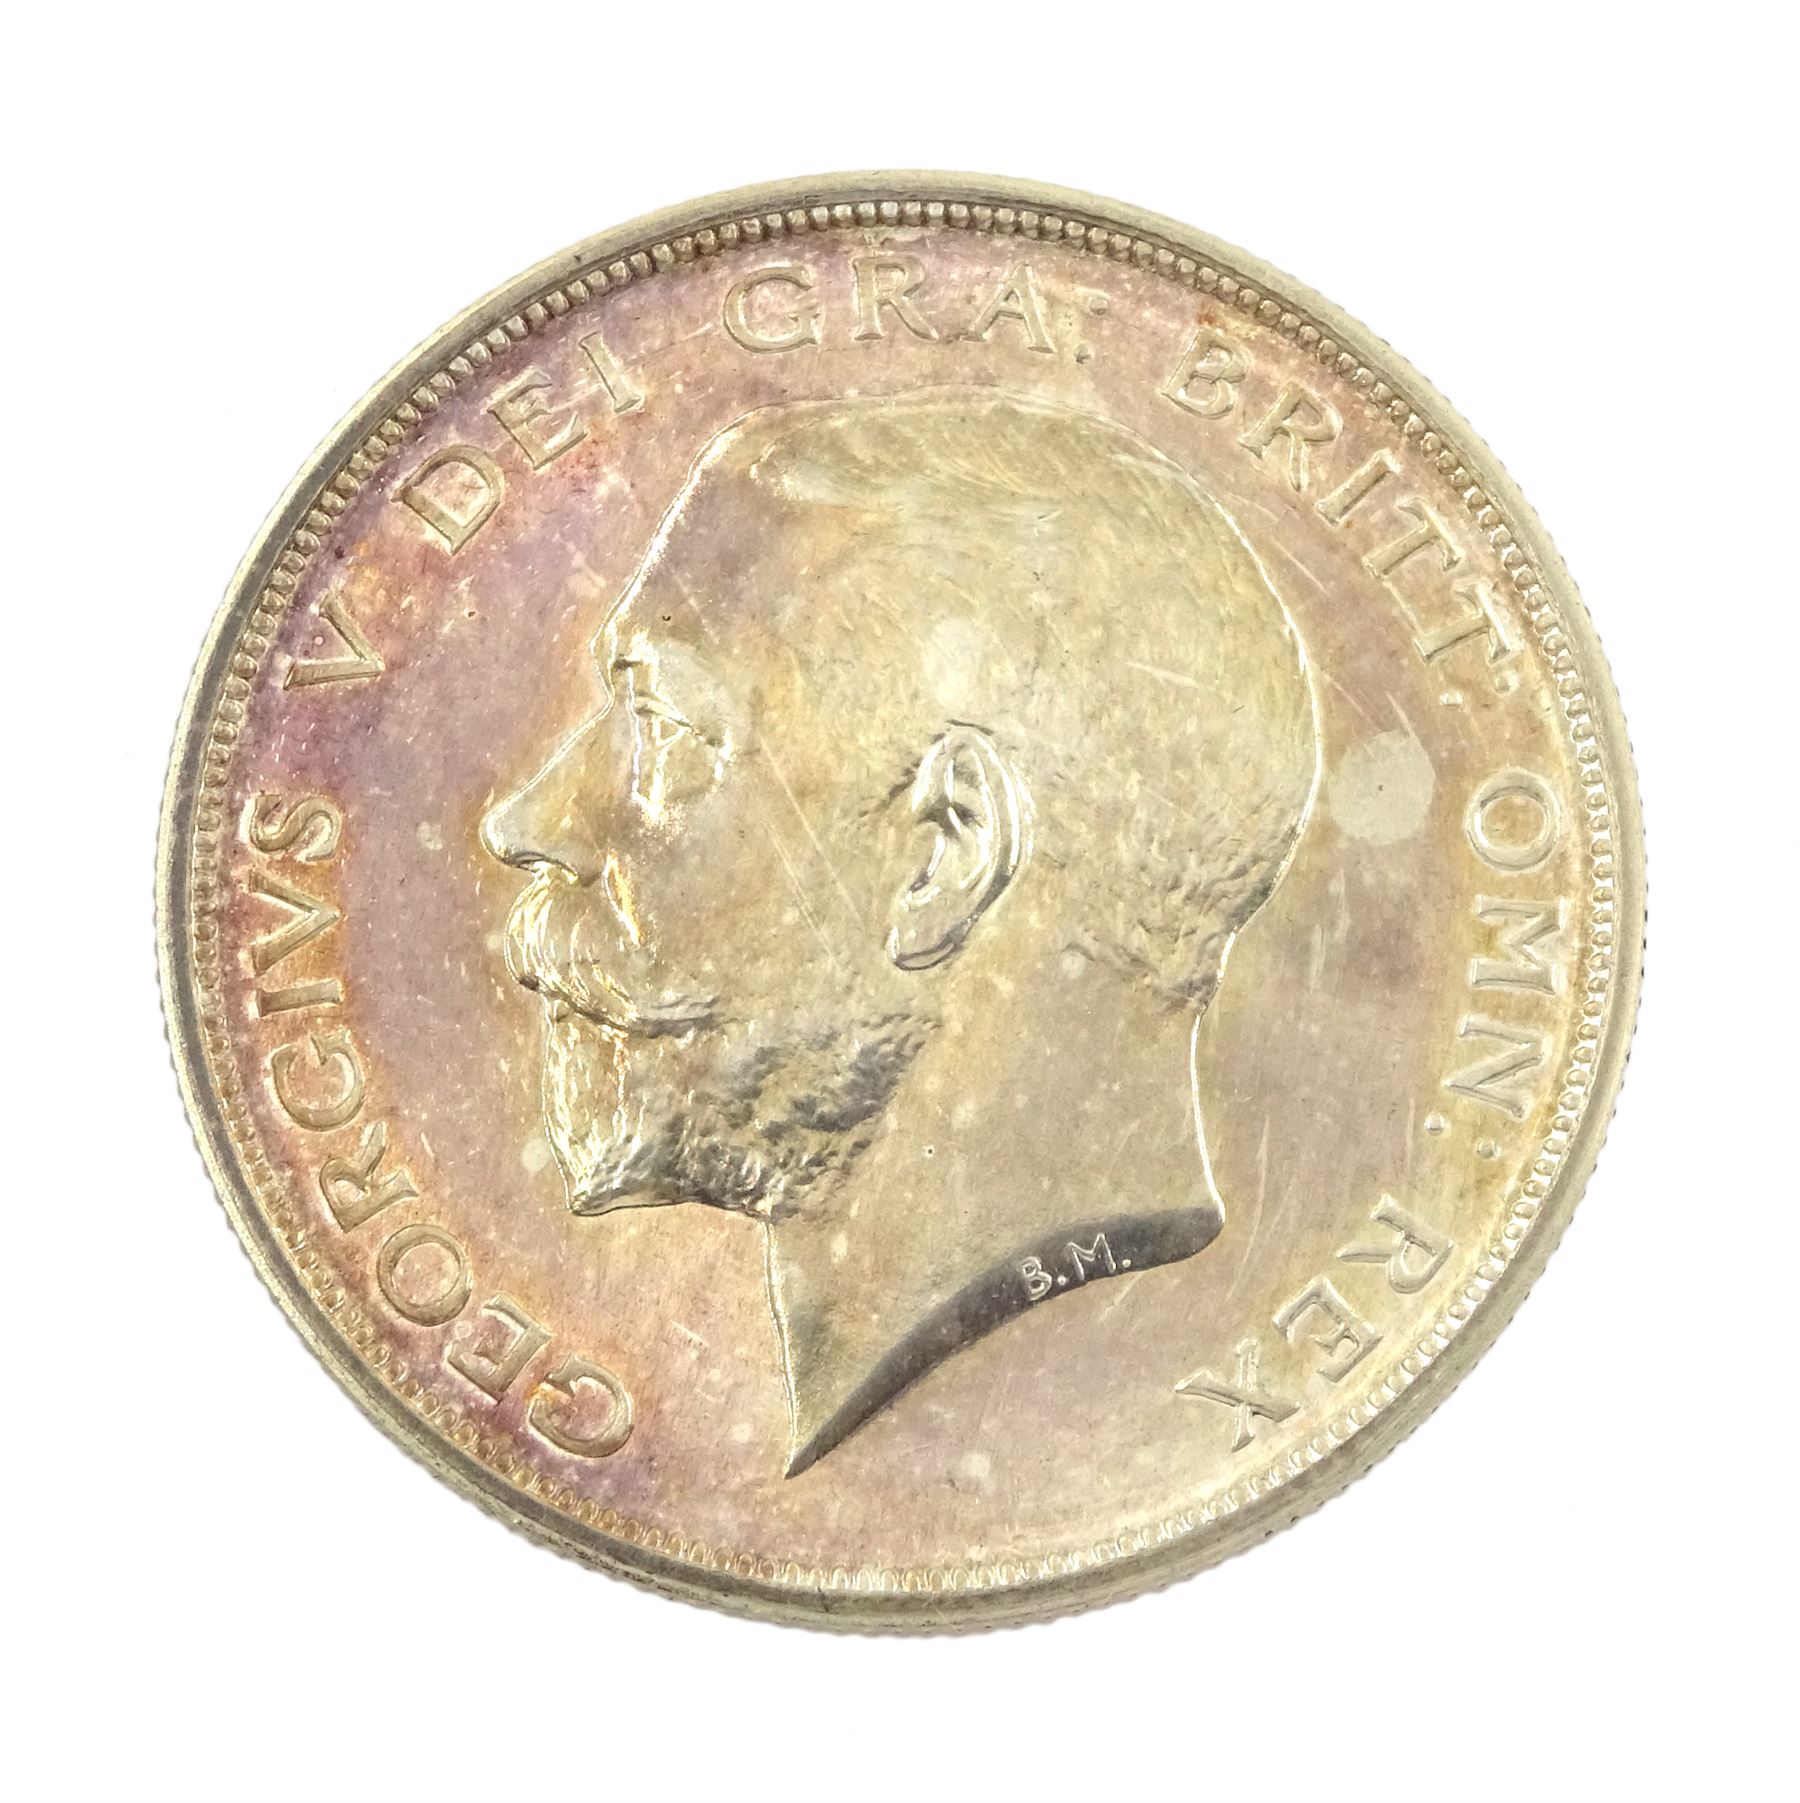 King George V 1911 proof long coin set - Image 18 of 28